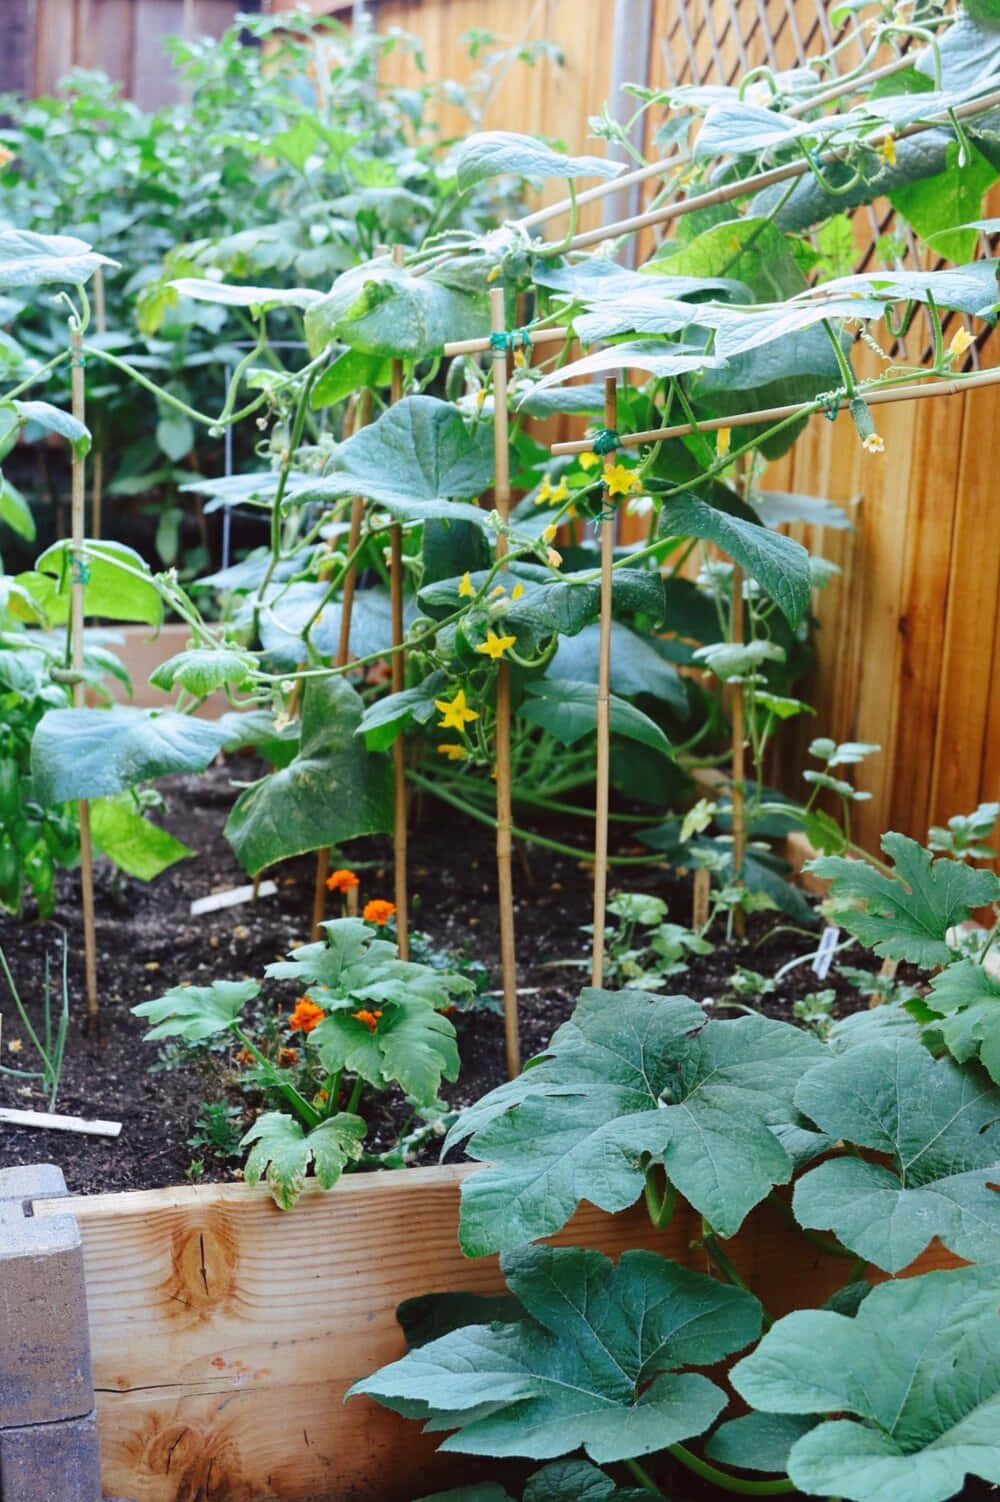 Growing zucchini in your garden using the trellis technique